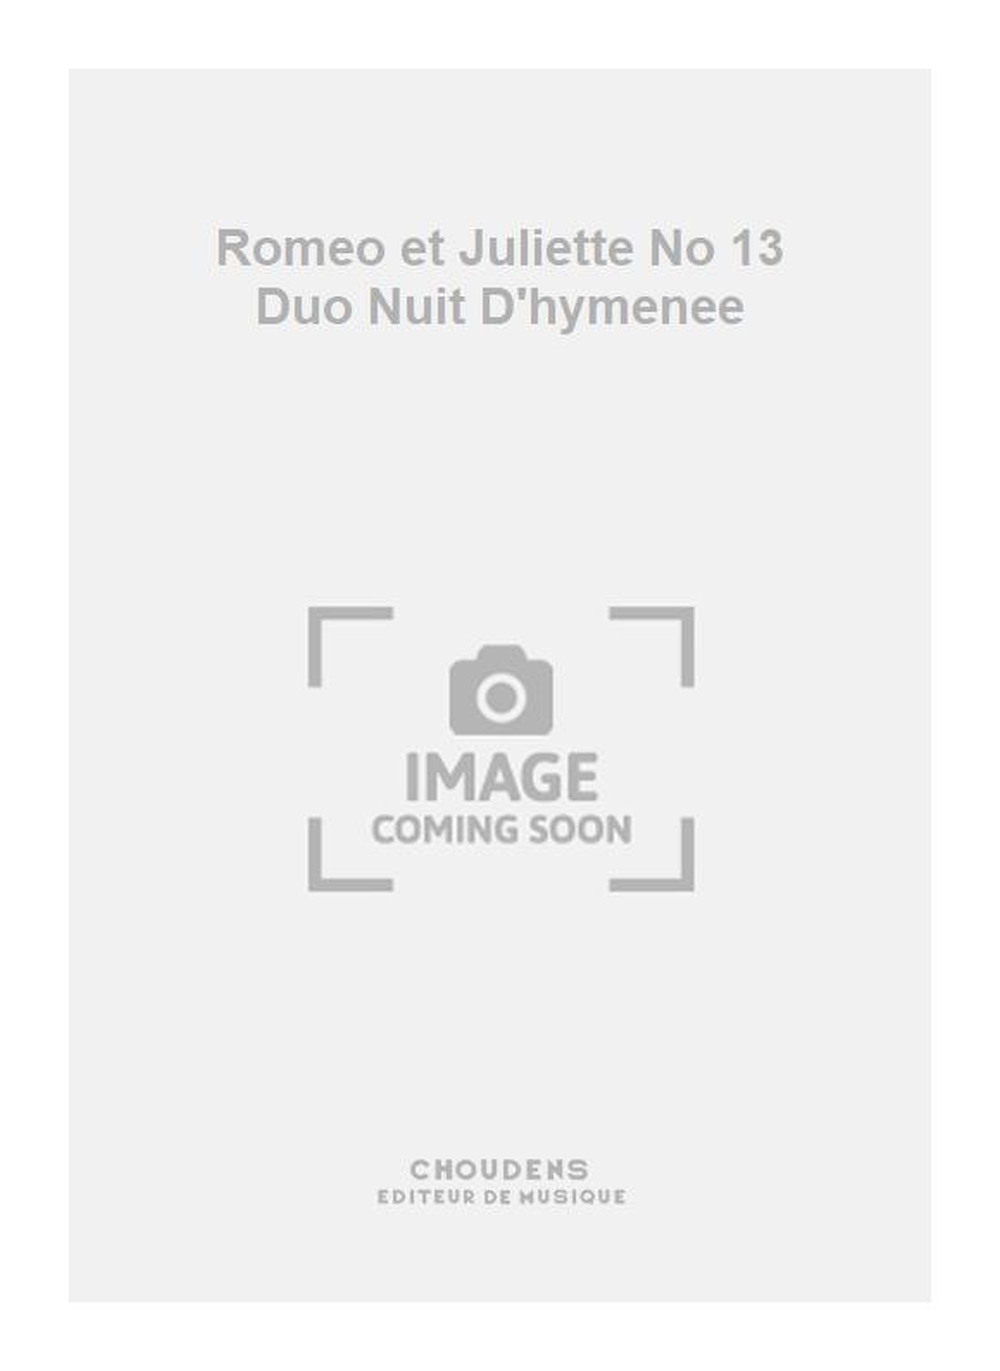 Charles Gounod: Romeo et Juliette No 13 Duo Nuit D'hymenee